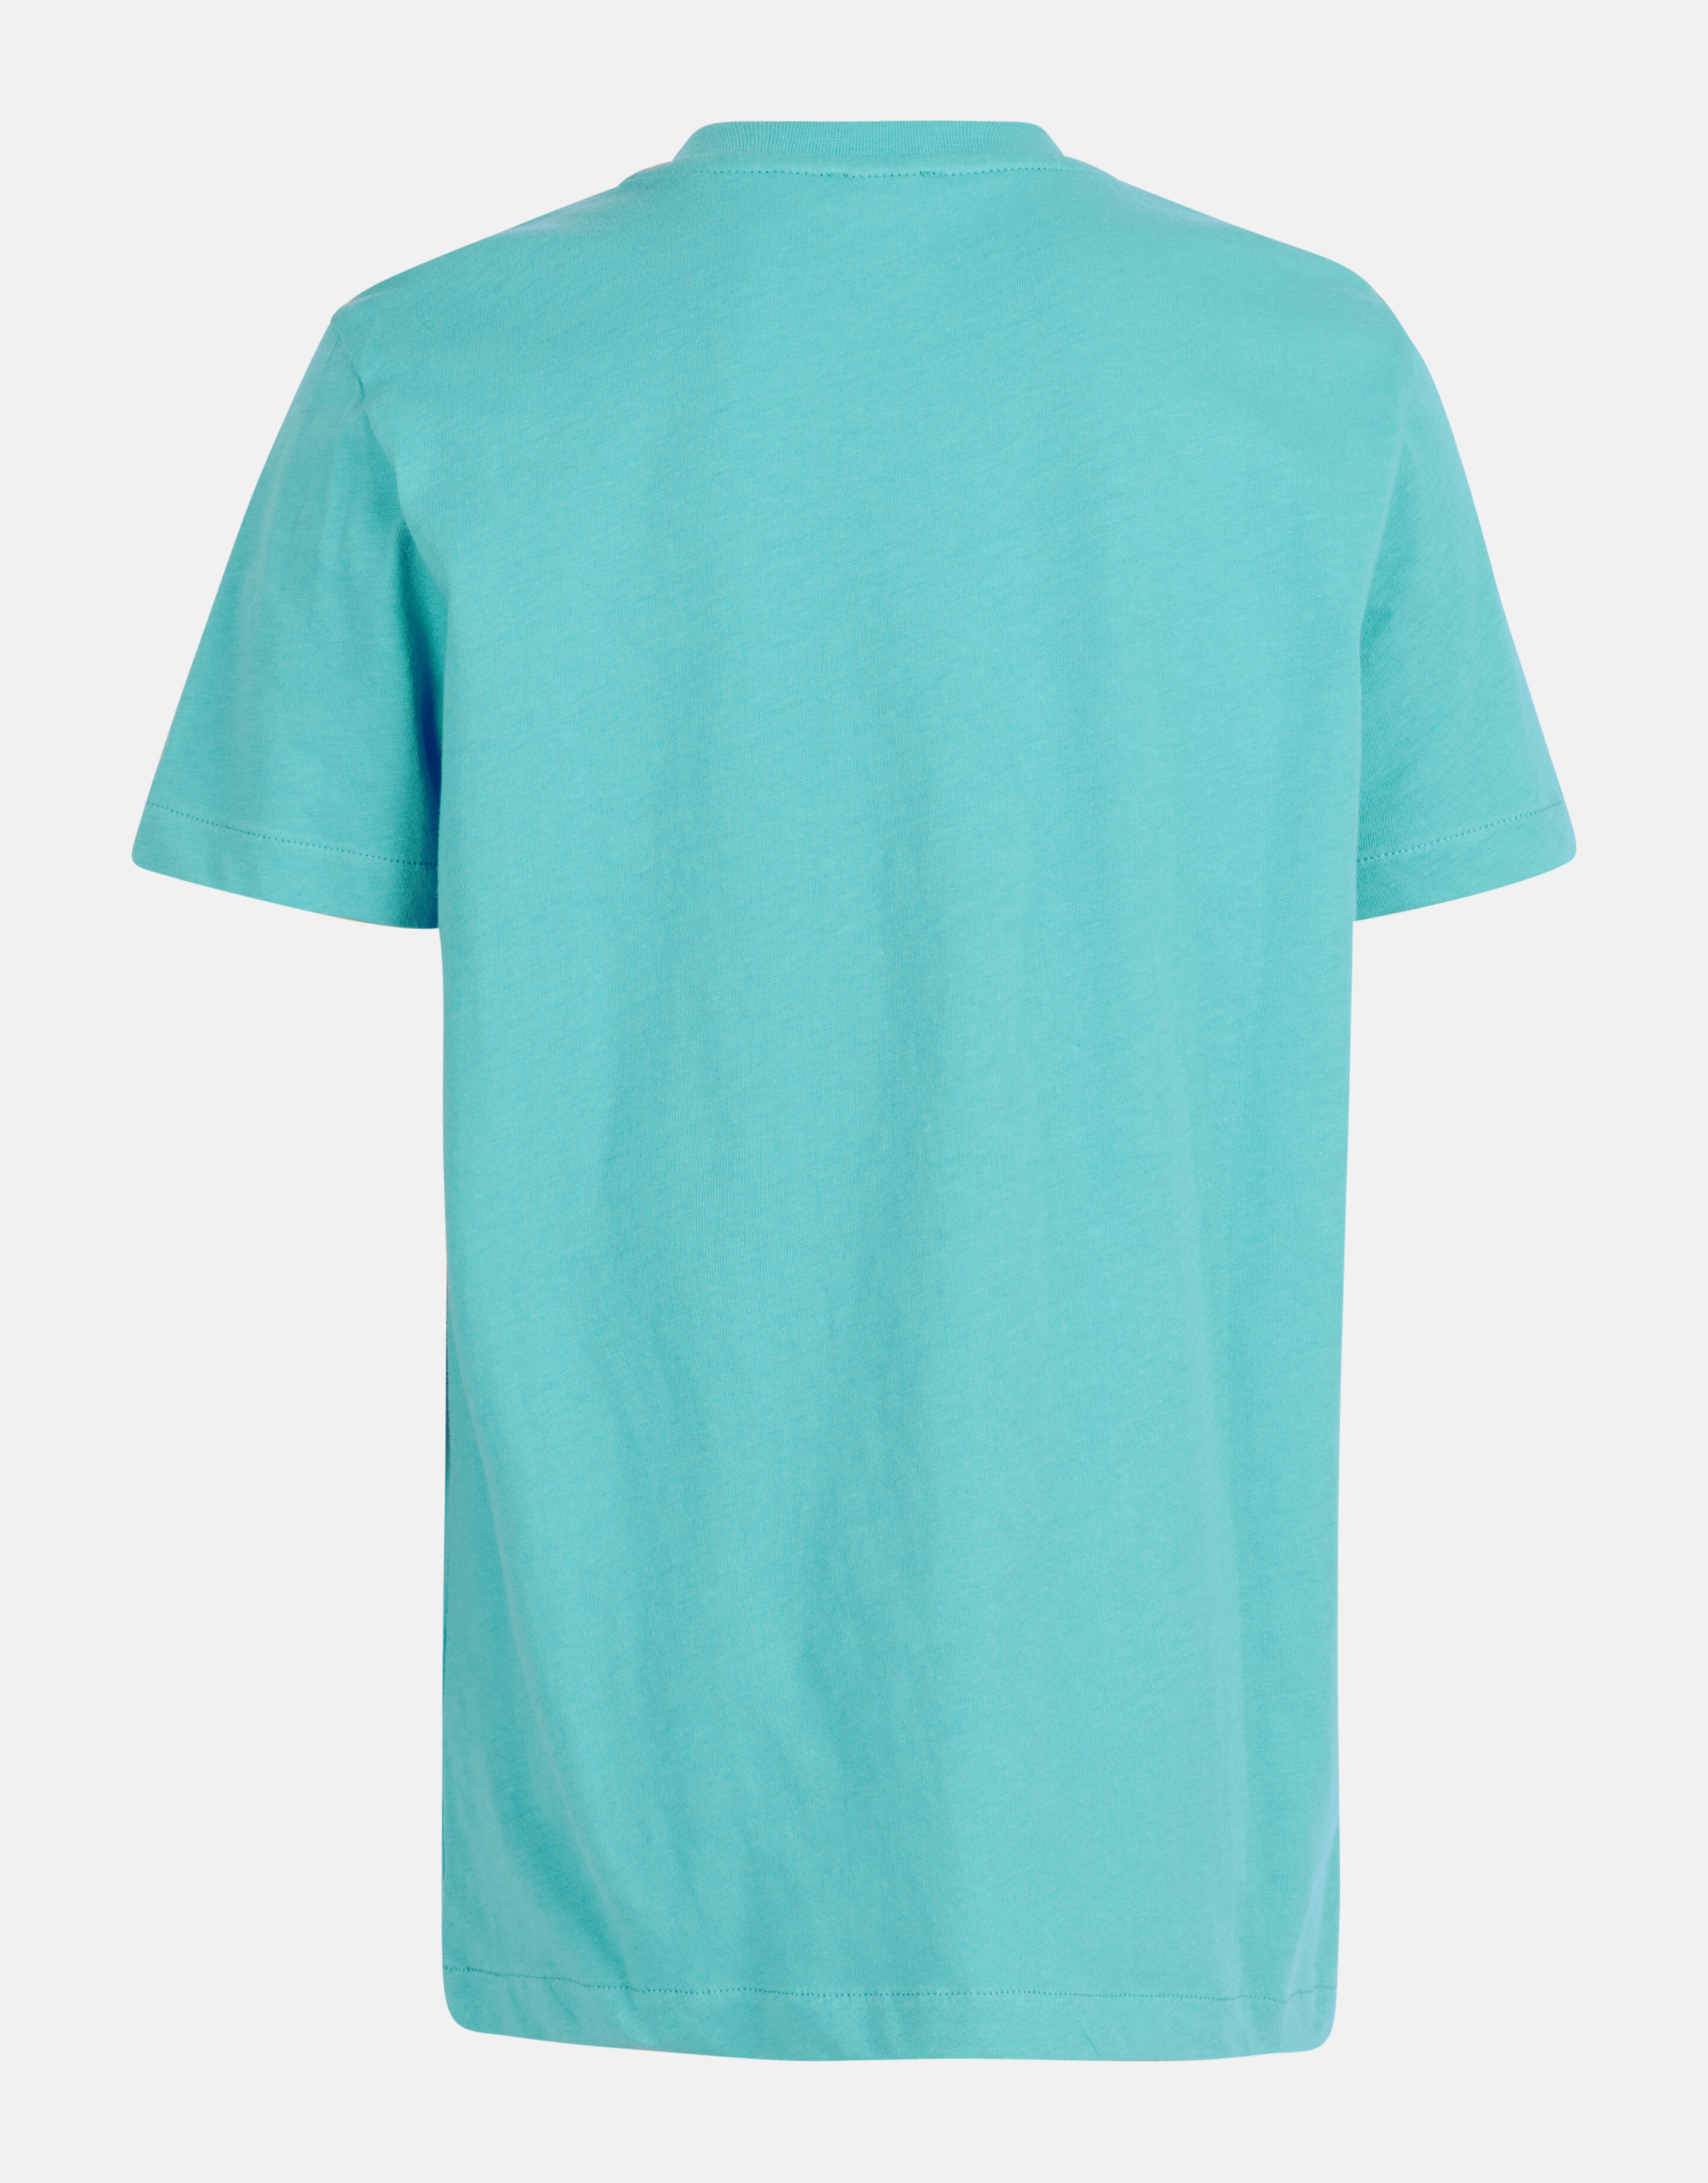 Druck-T-Shirt Blau SHOEBY BOYS